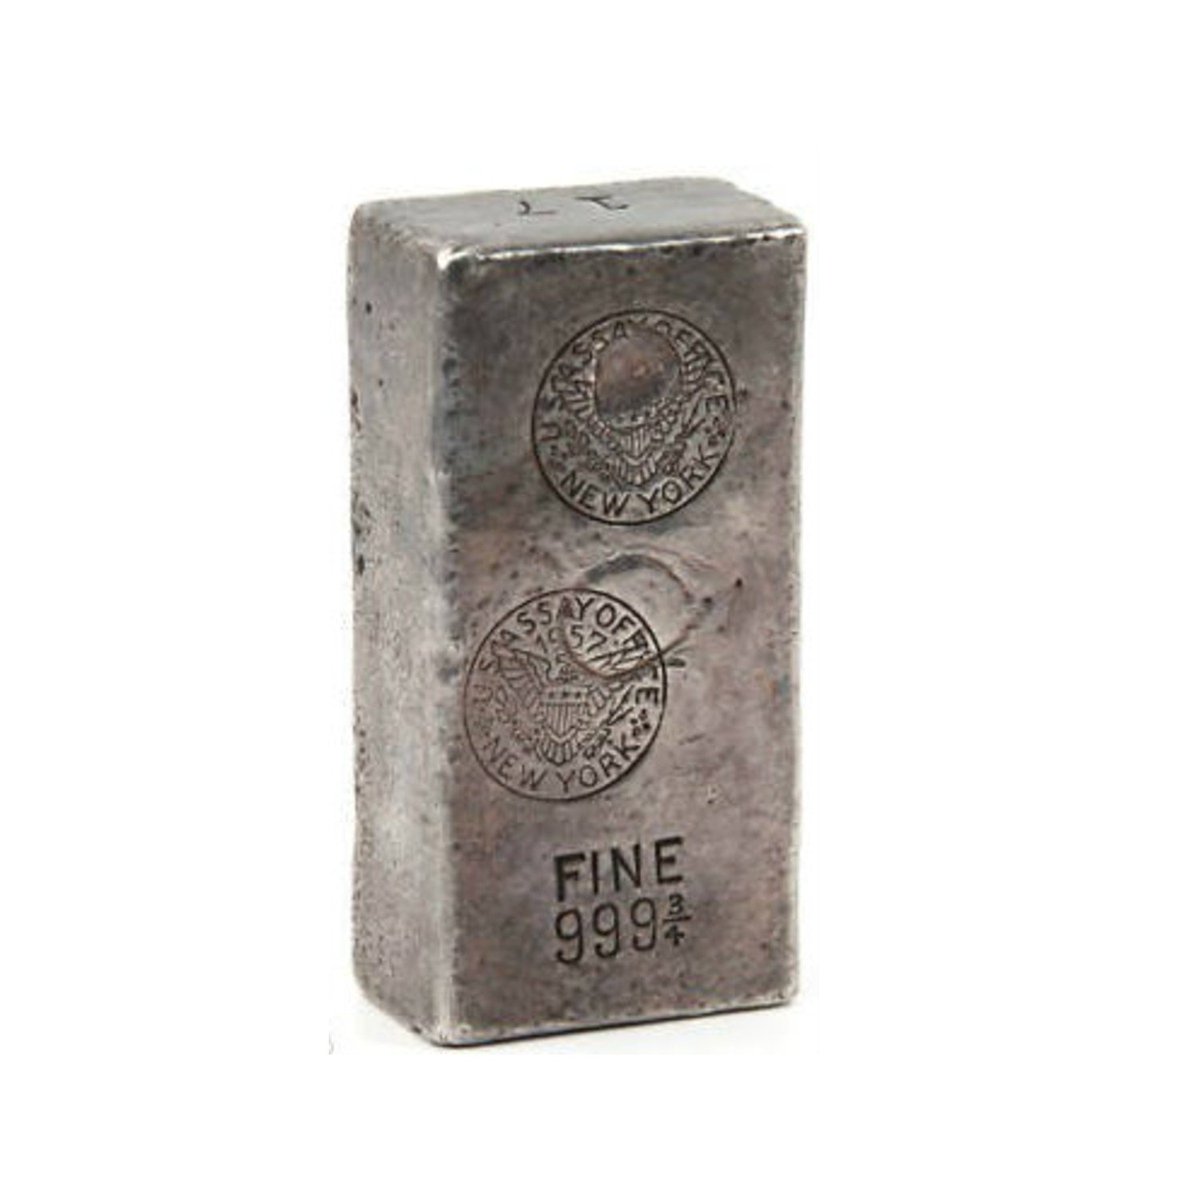 Brick.

#vintagesilver #silver #silverbar #argent #銀 #plata
Credit: Golden Eagle Coins